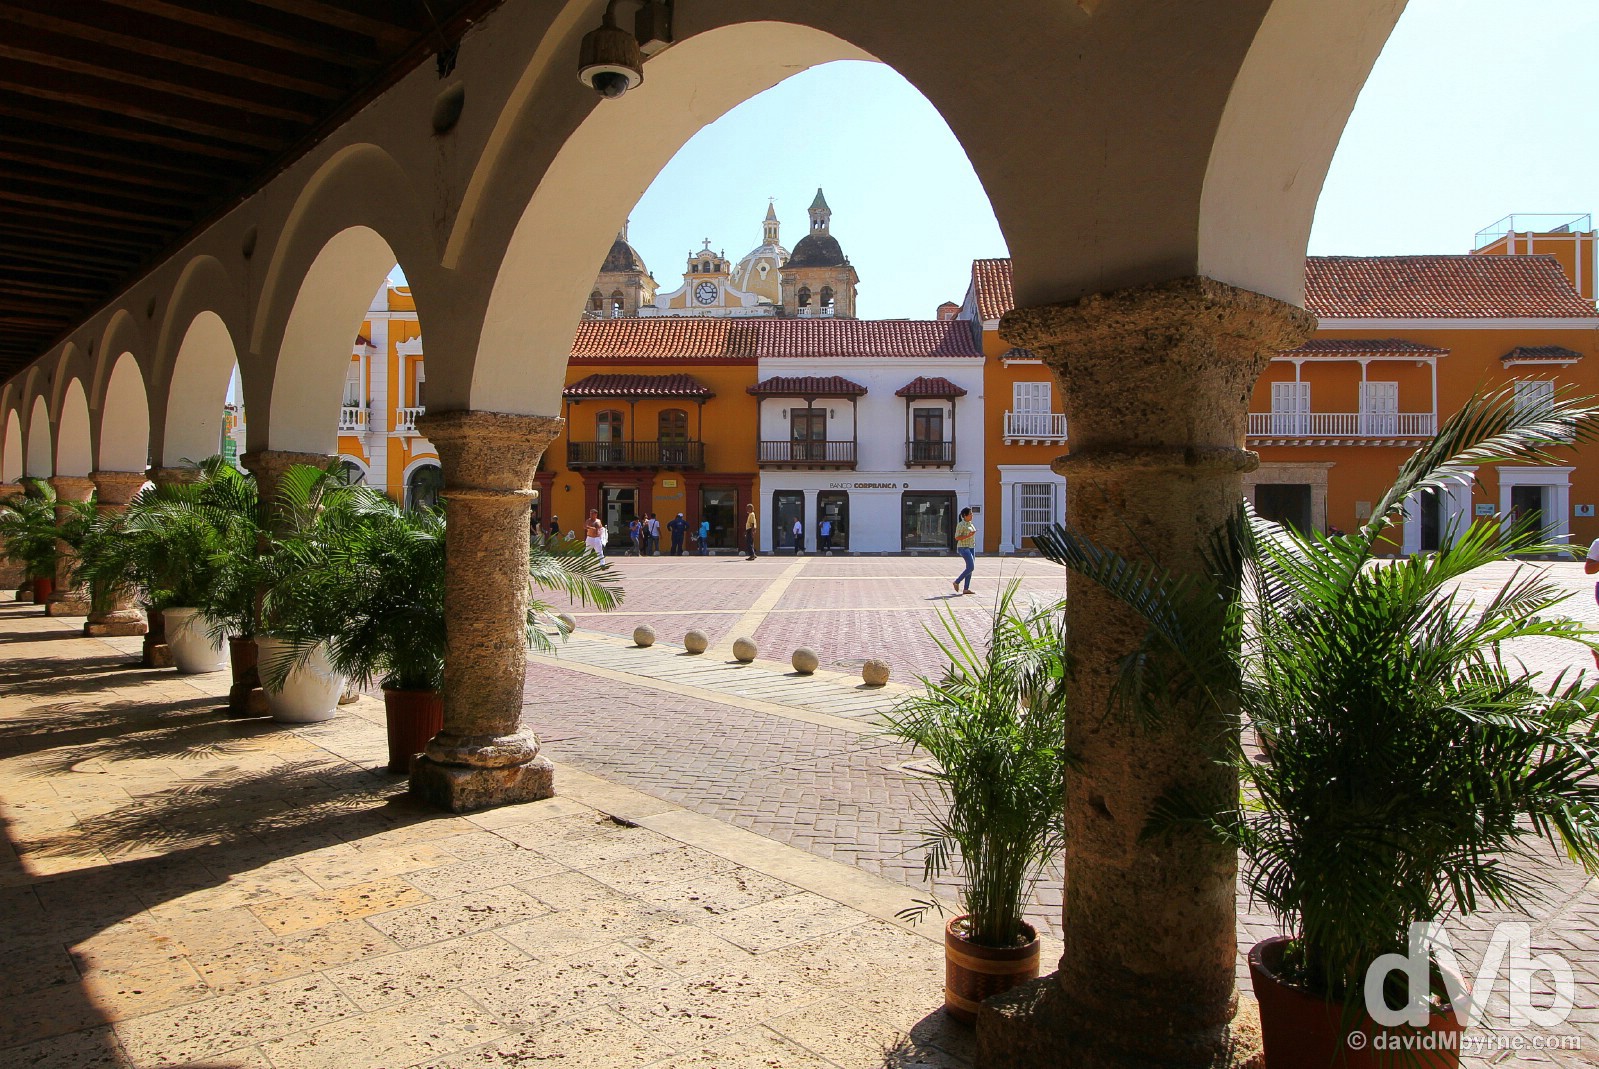 Plaza de la Aduana in Old Town Cartagena, Colombia. June 25, 2015.